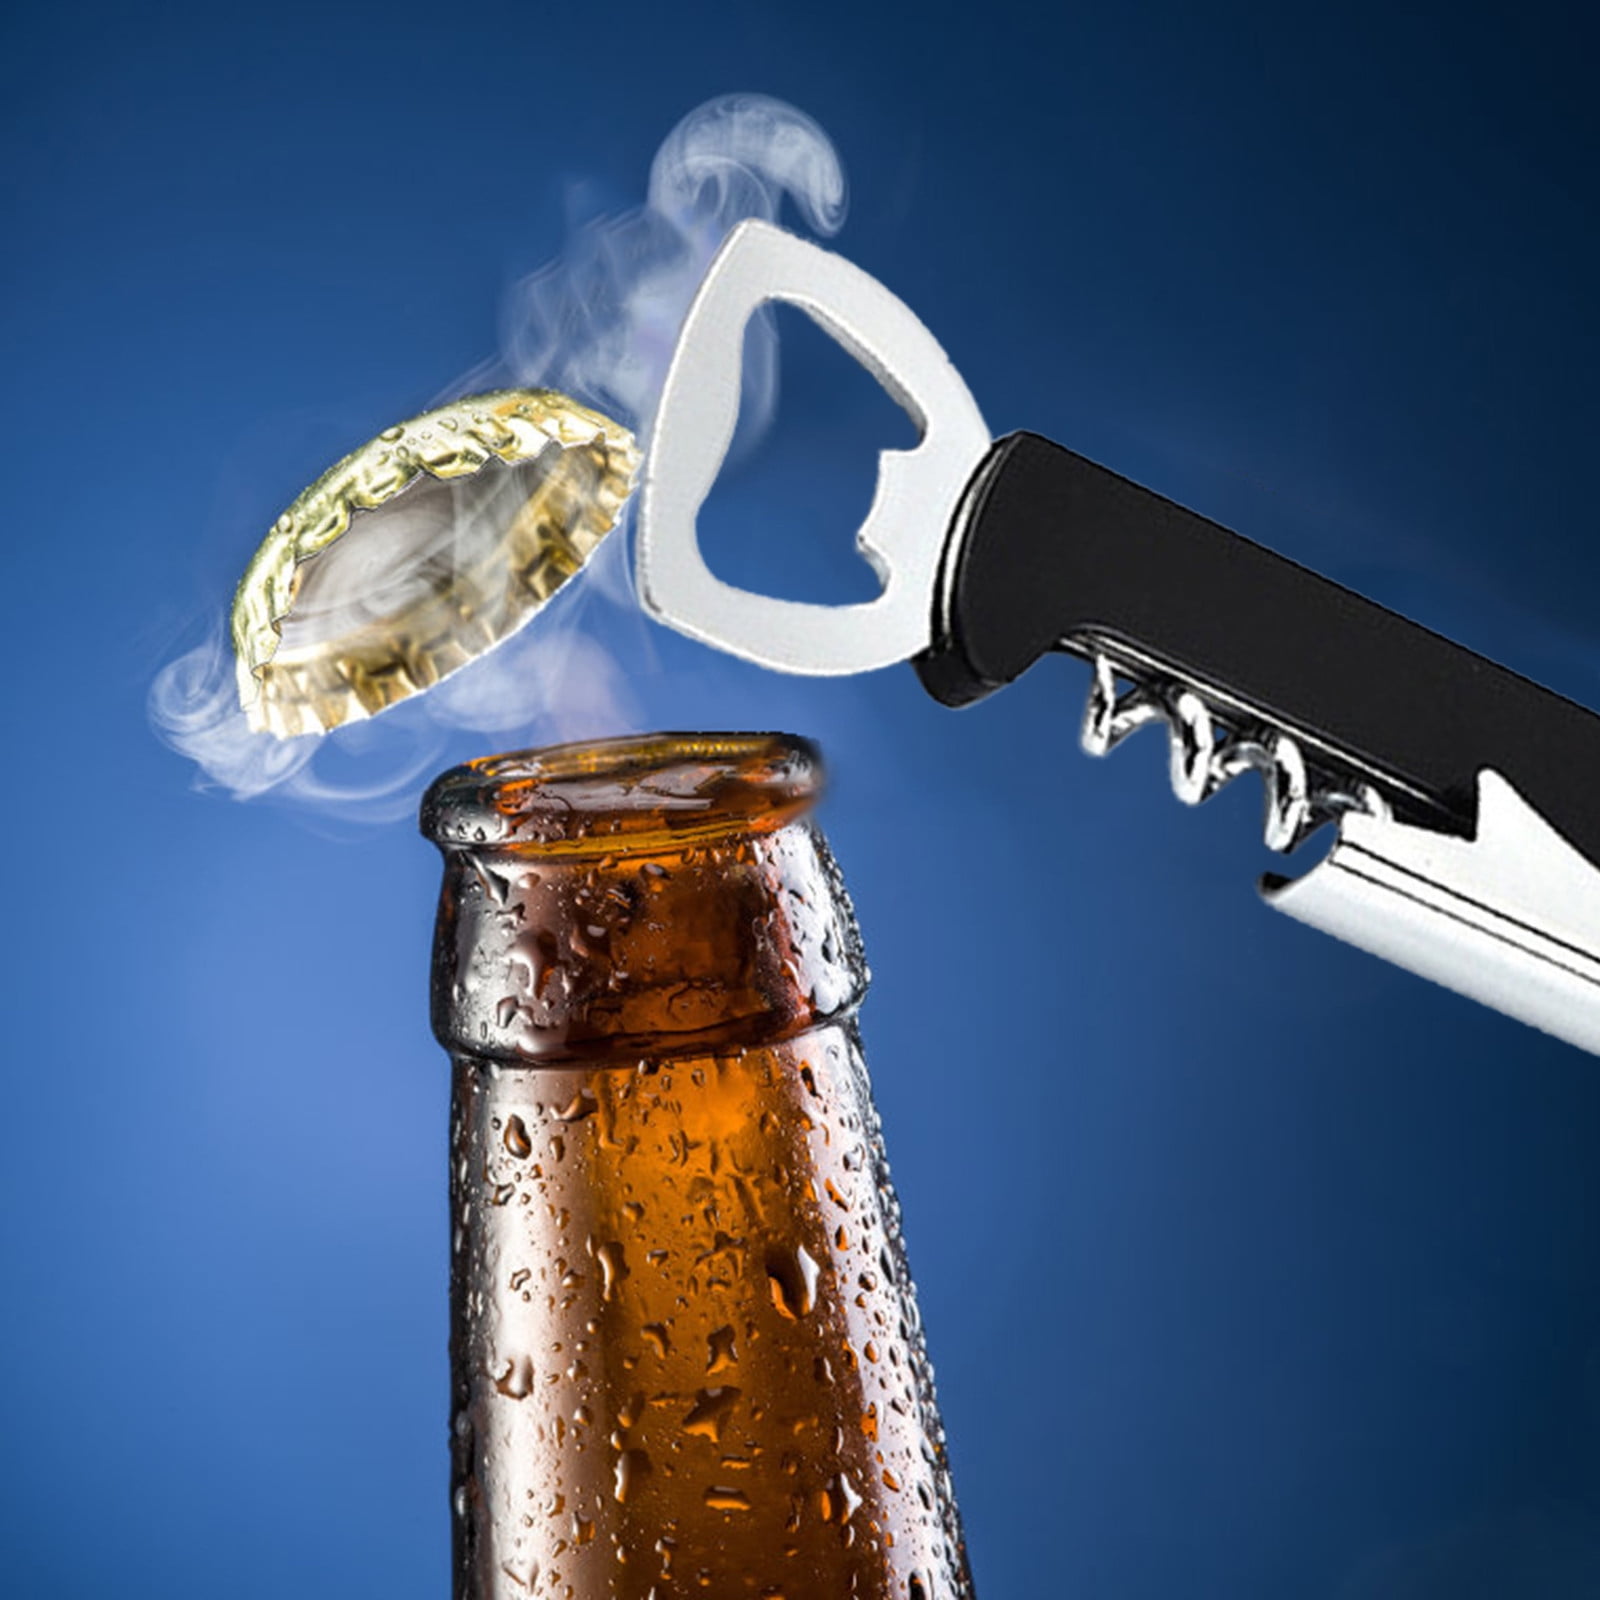 Manual Key Shape Metal Beer Soda Bottle Opener Camping Kitchen Bar Tool 6T